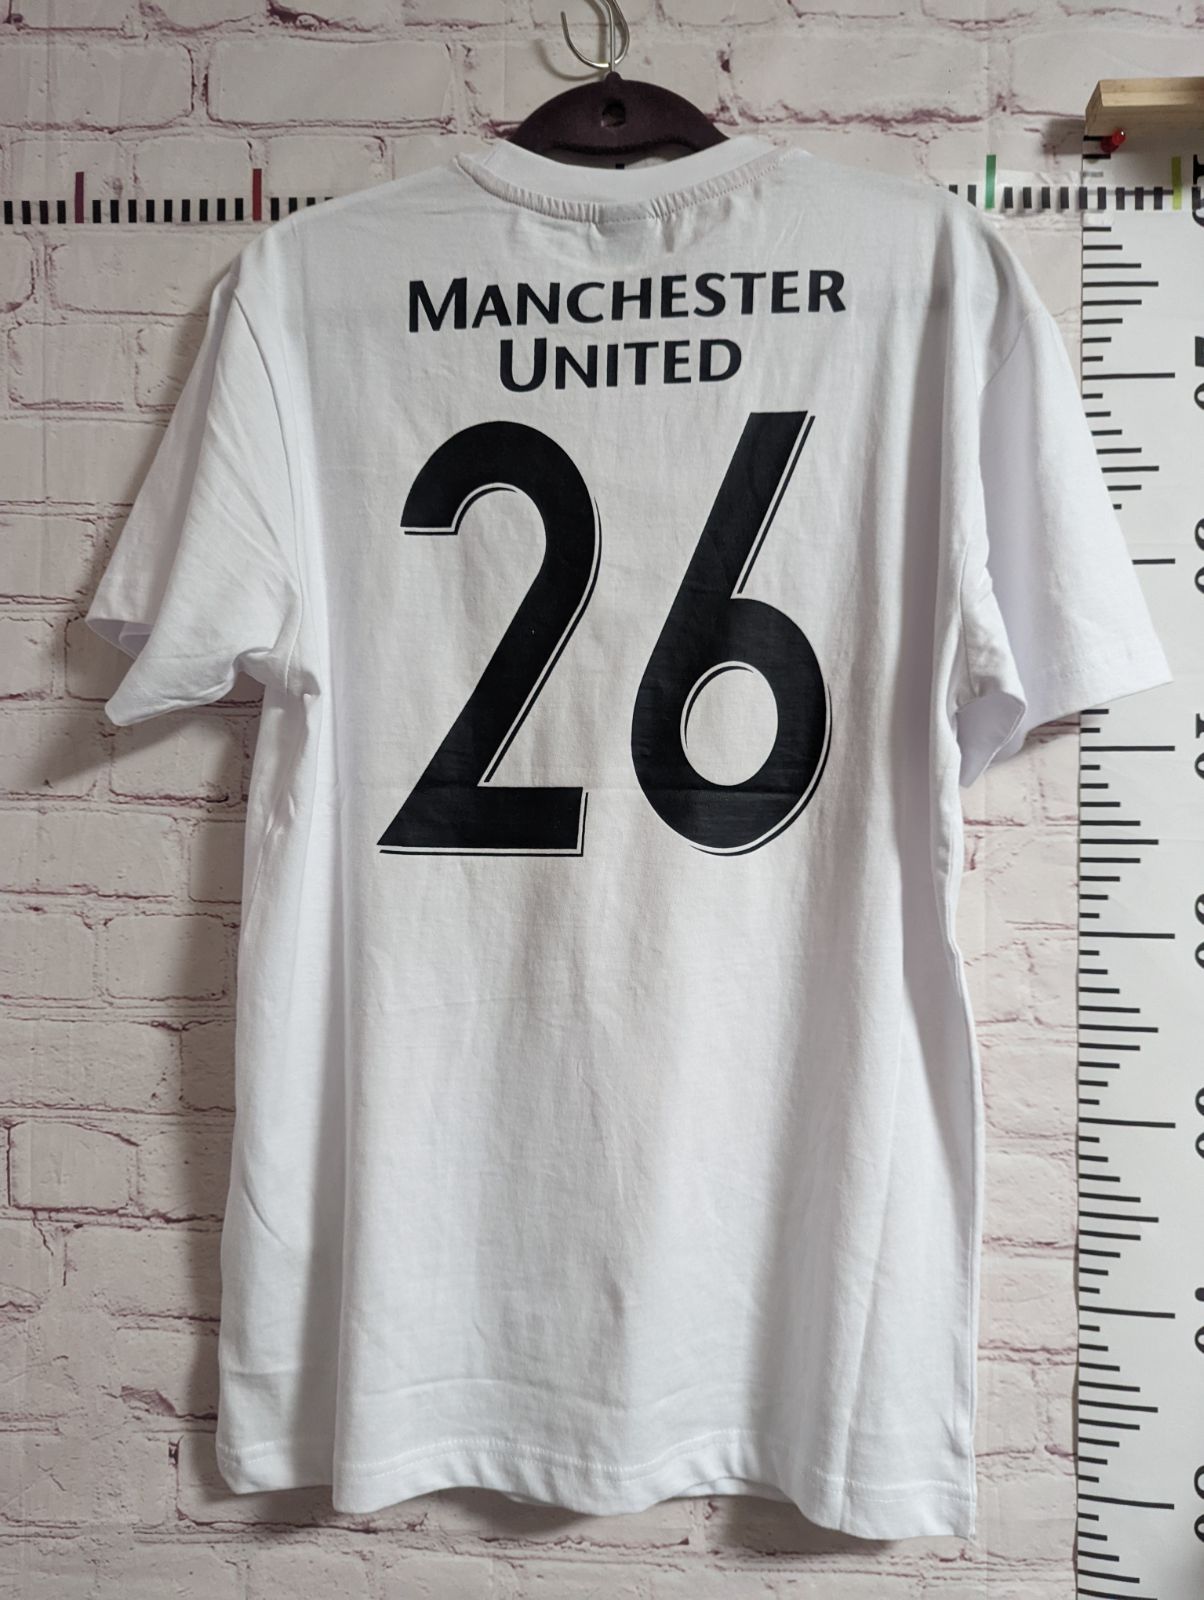 ManchesterUnited香川真司ティーシャツ - フットサル